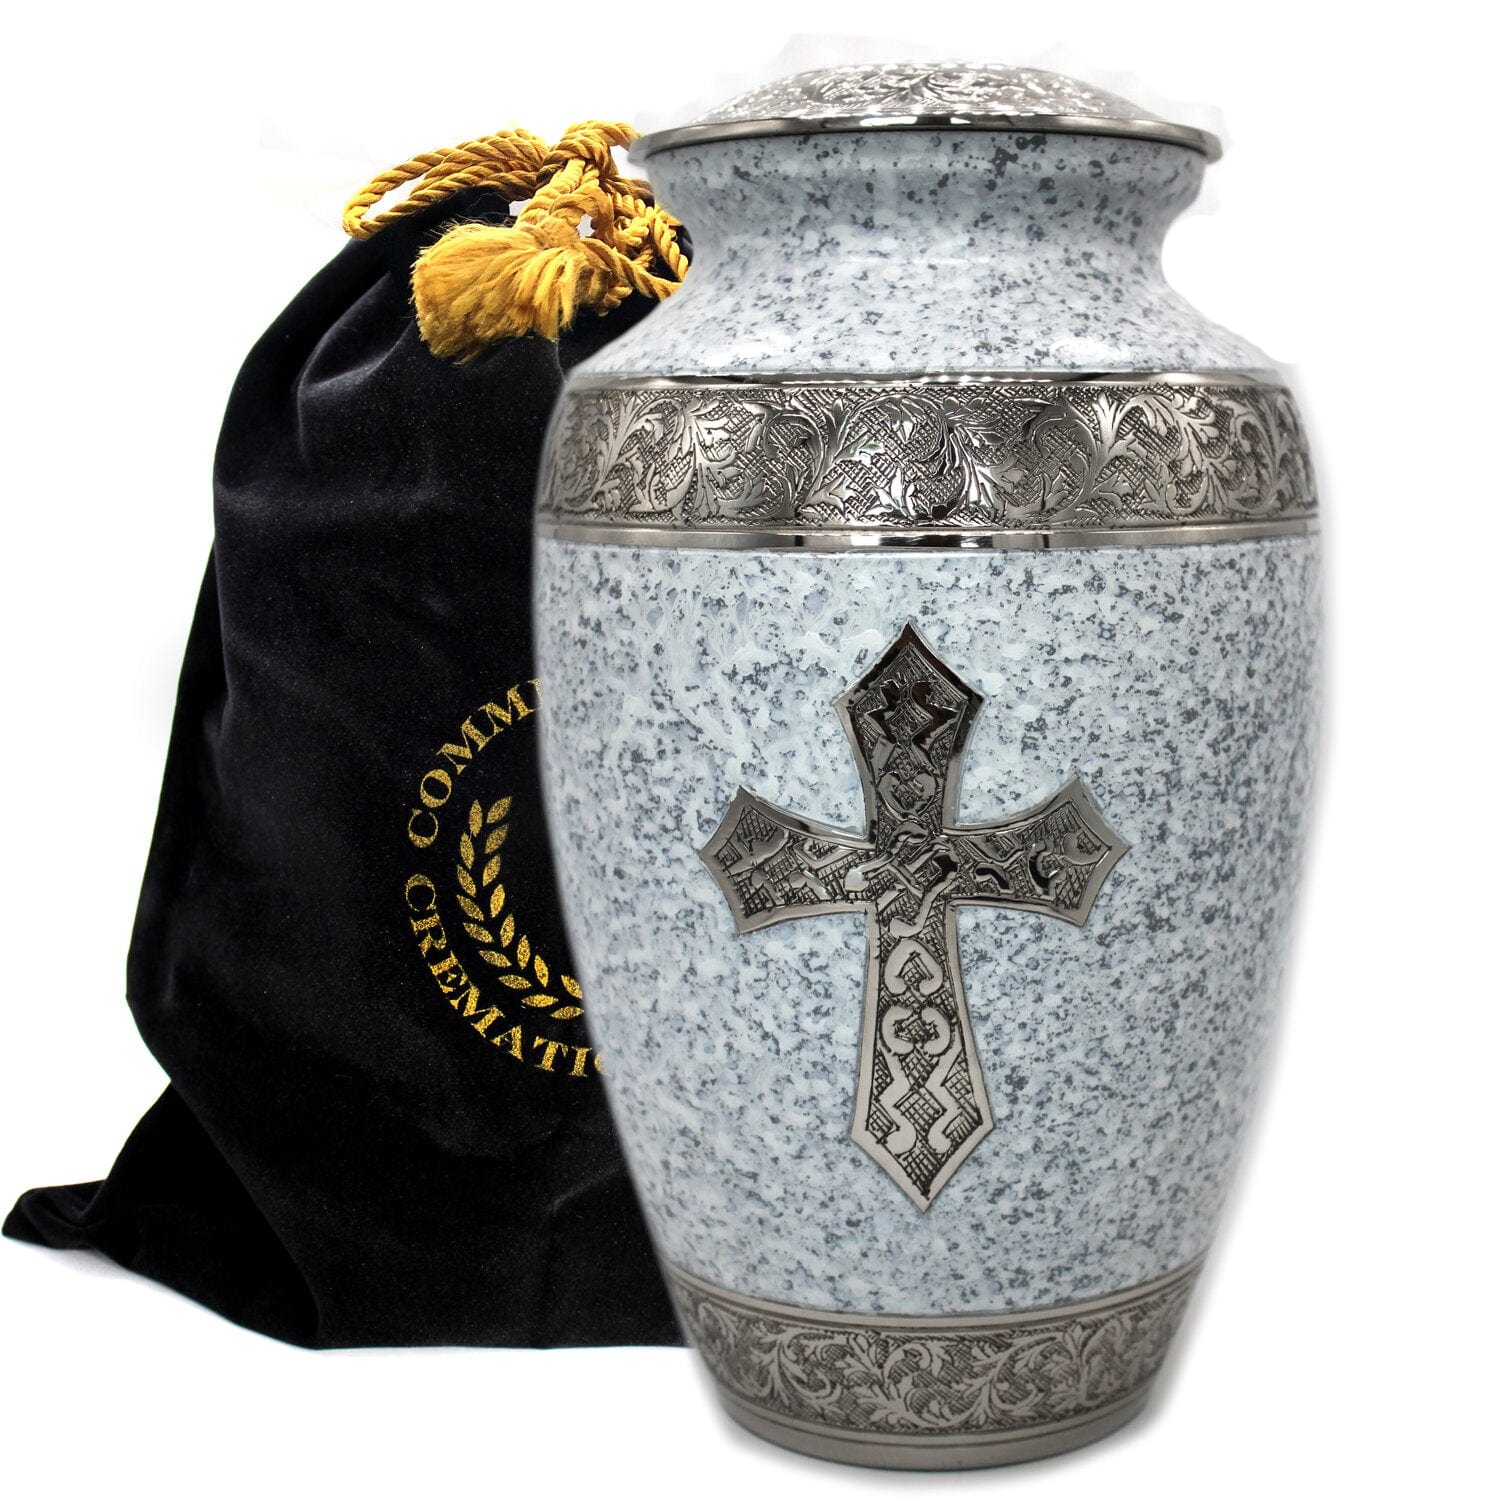 Commemorative Cremation Urns Home & Garden Large Love of Christ Speckled White Cremation Urn